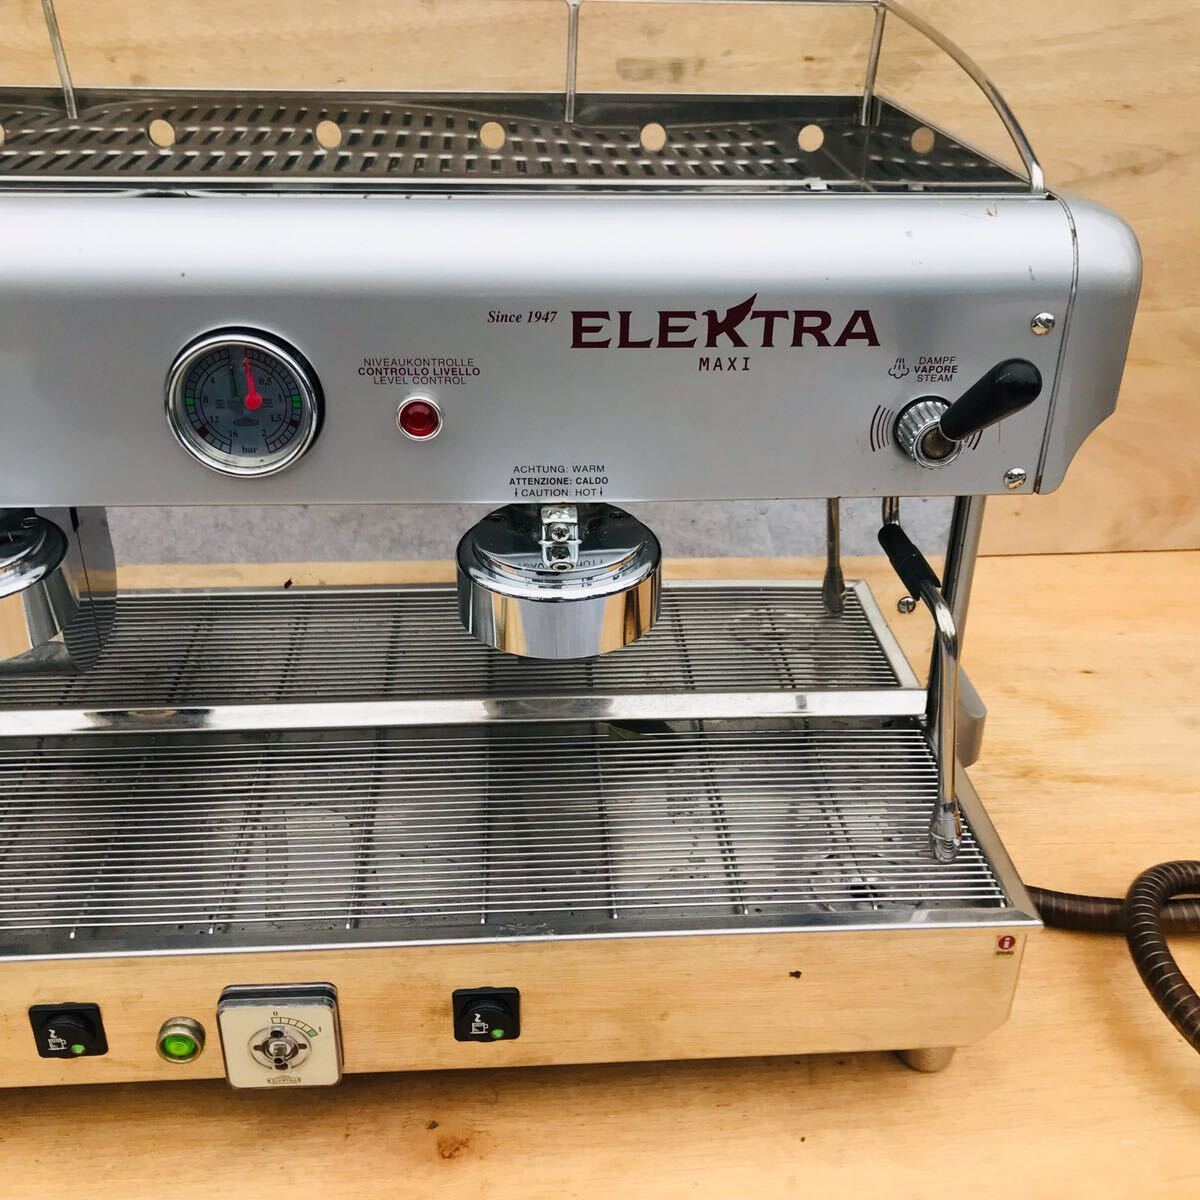  elect la[ELEKTRA]Since 1947 Espresso machine operation goods 